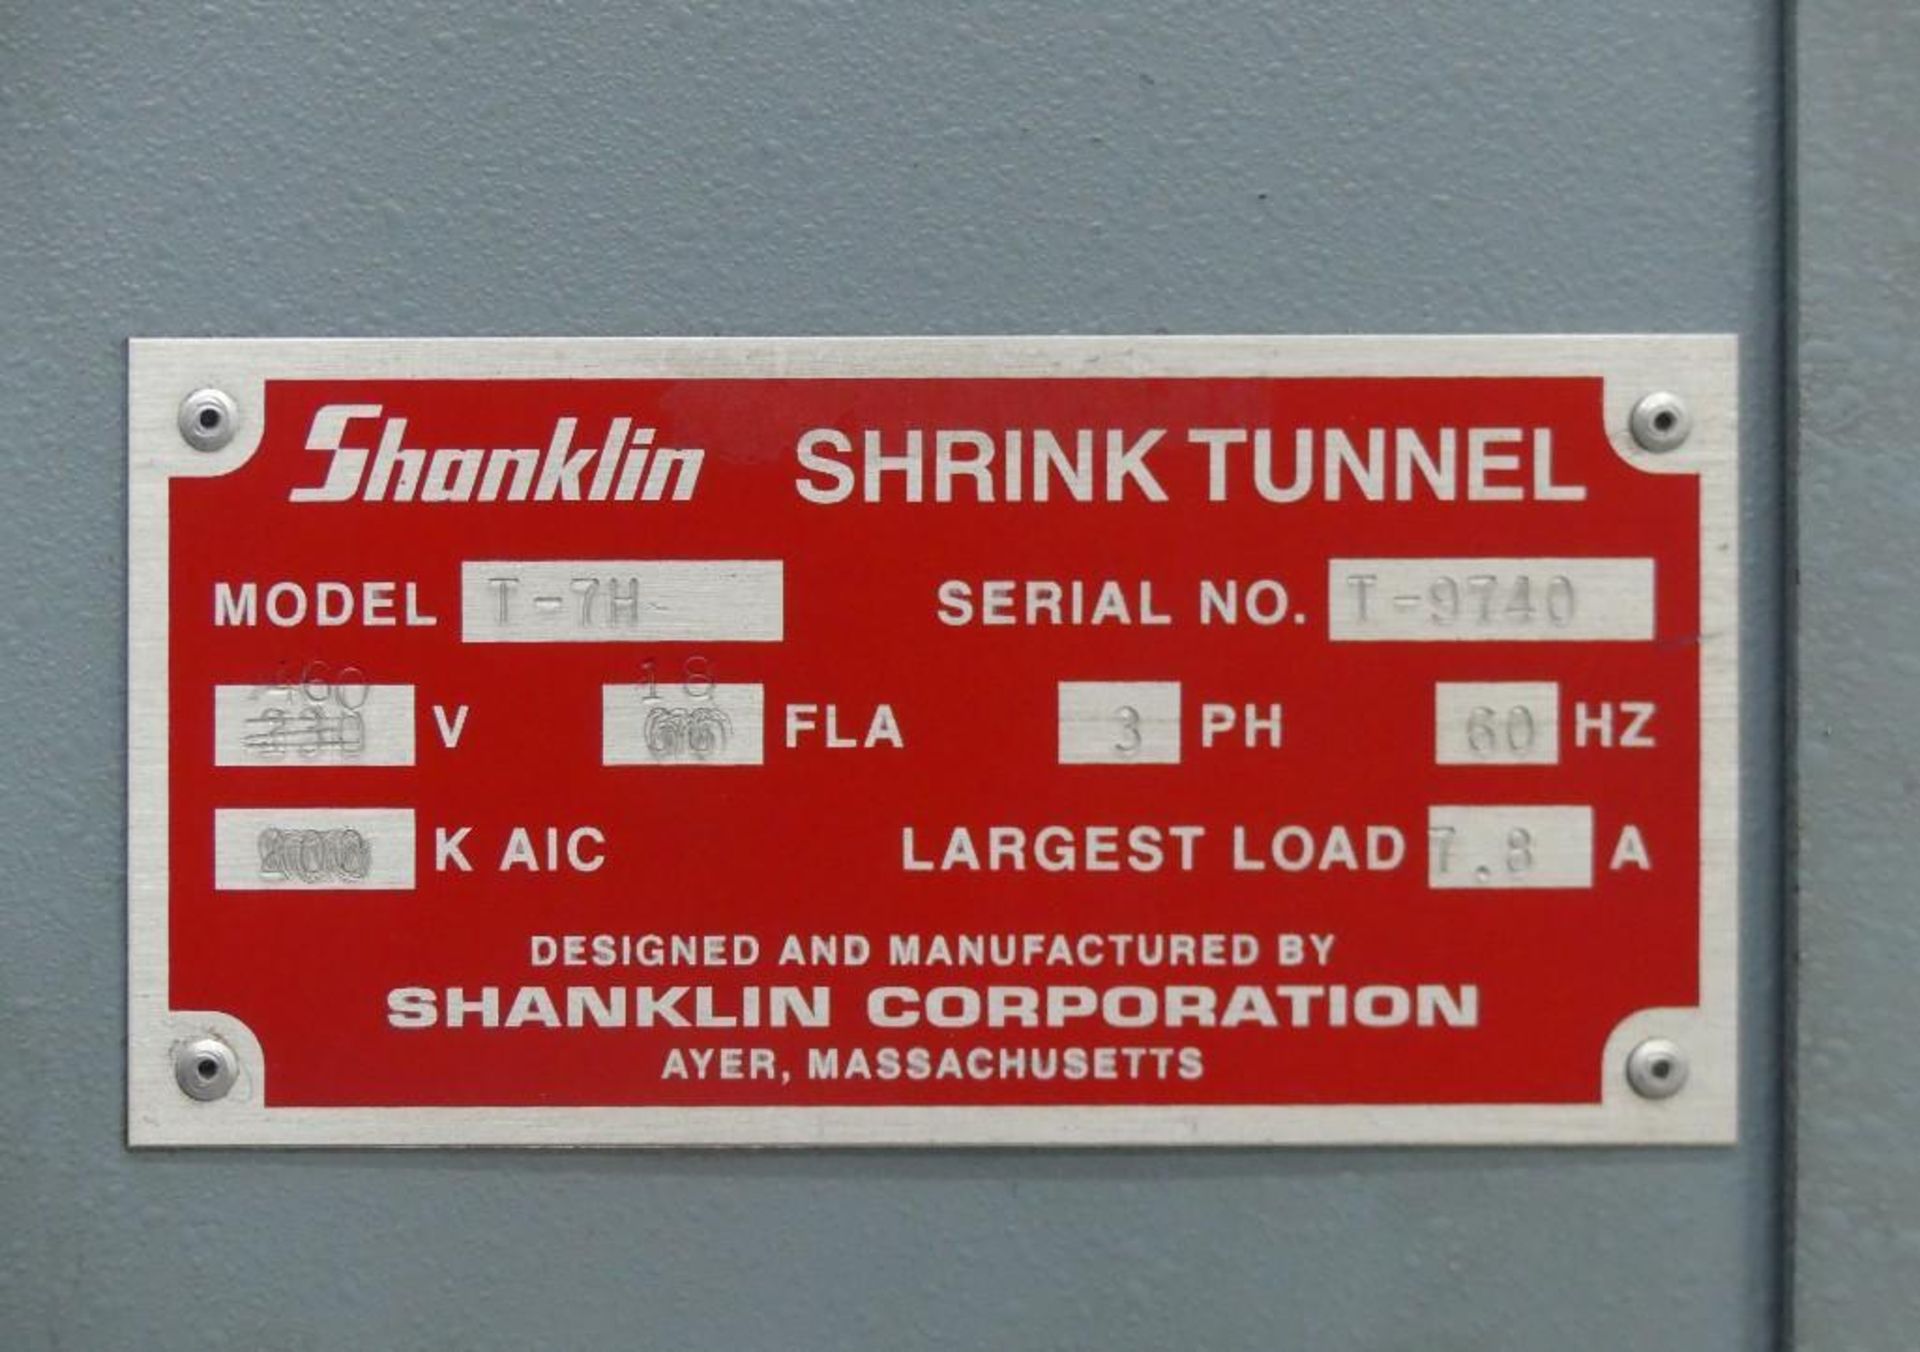 Shanklin T-7H Heat Shrink Tunnel - Image 33 of 33